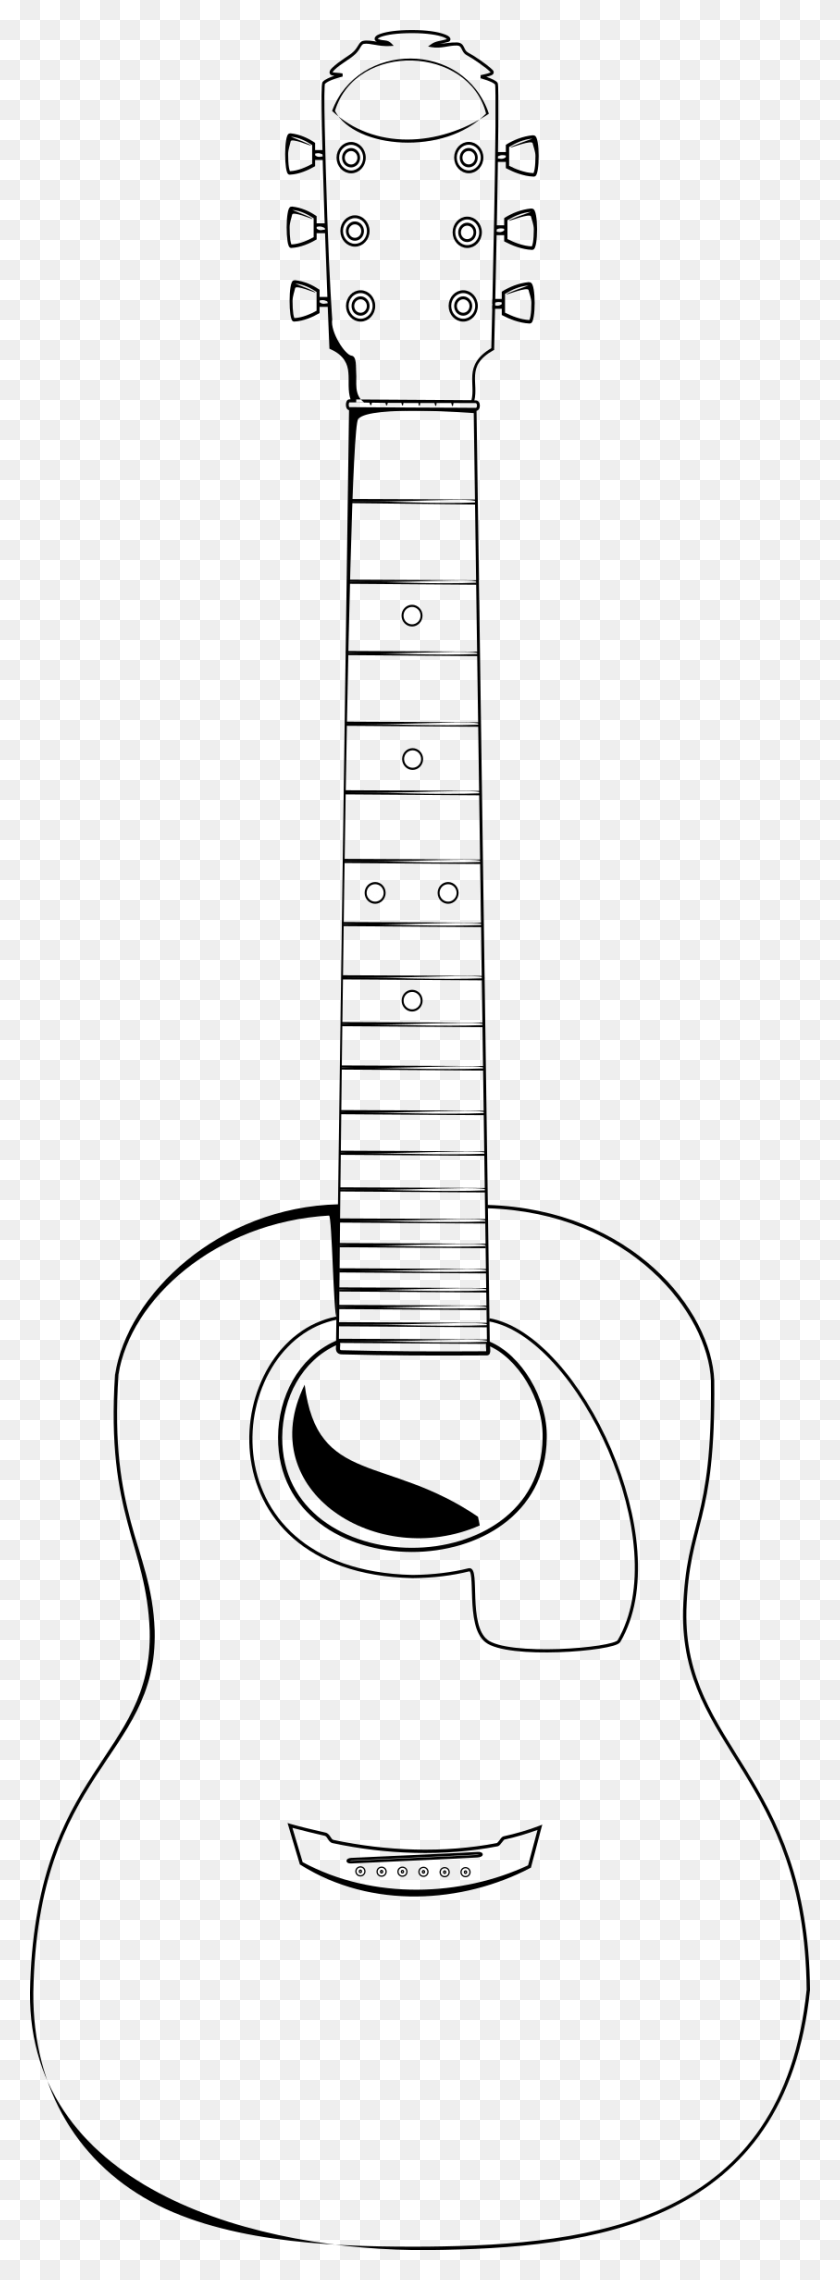 843x2400 This Free Icons Design Of Guitarra Acústica, Flare, Light, Gray Hd Png